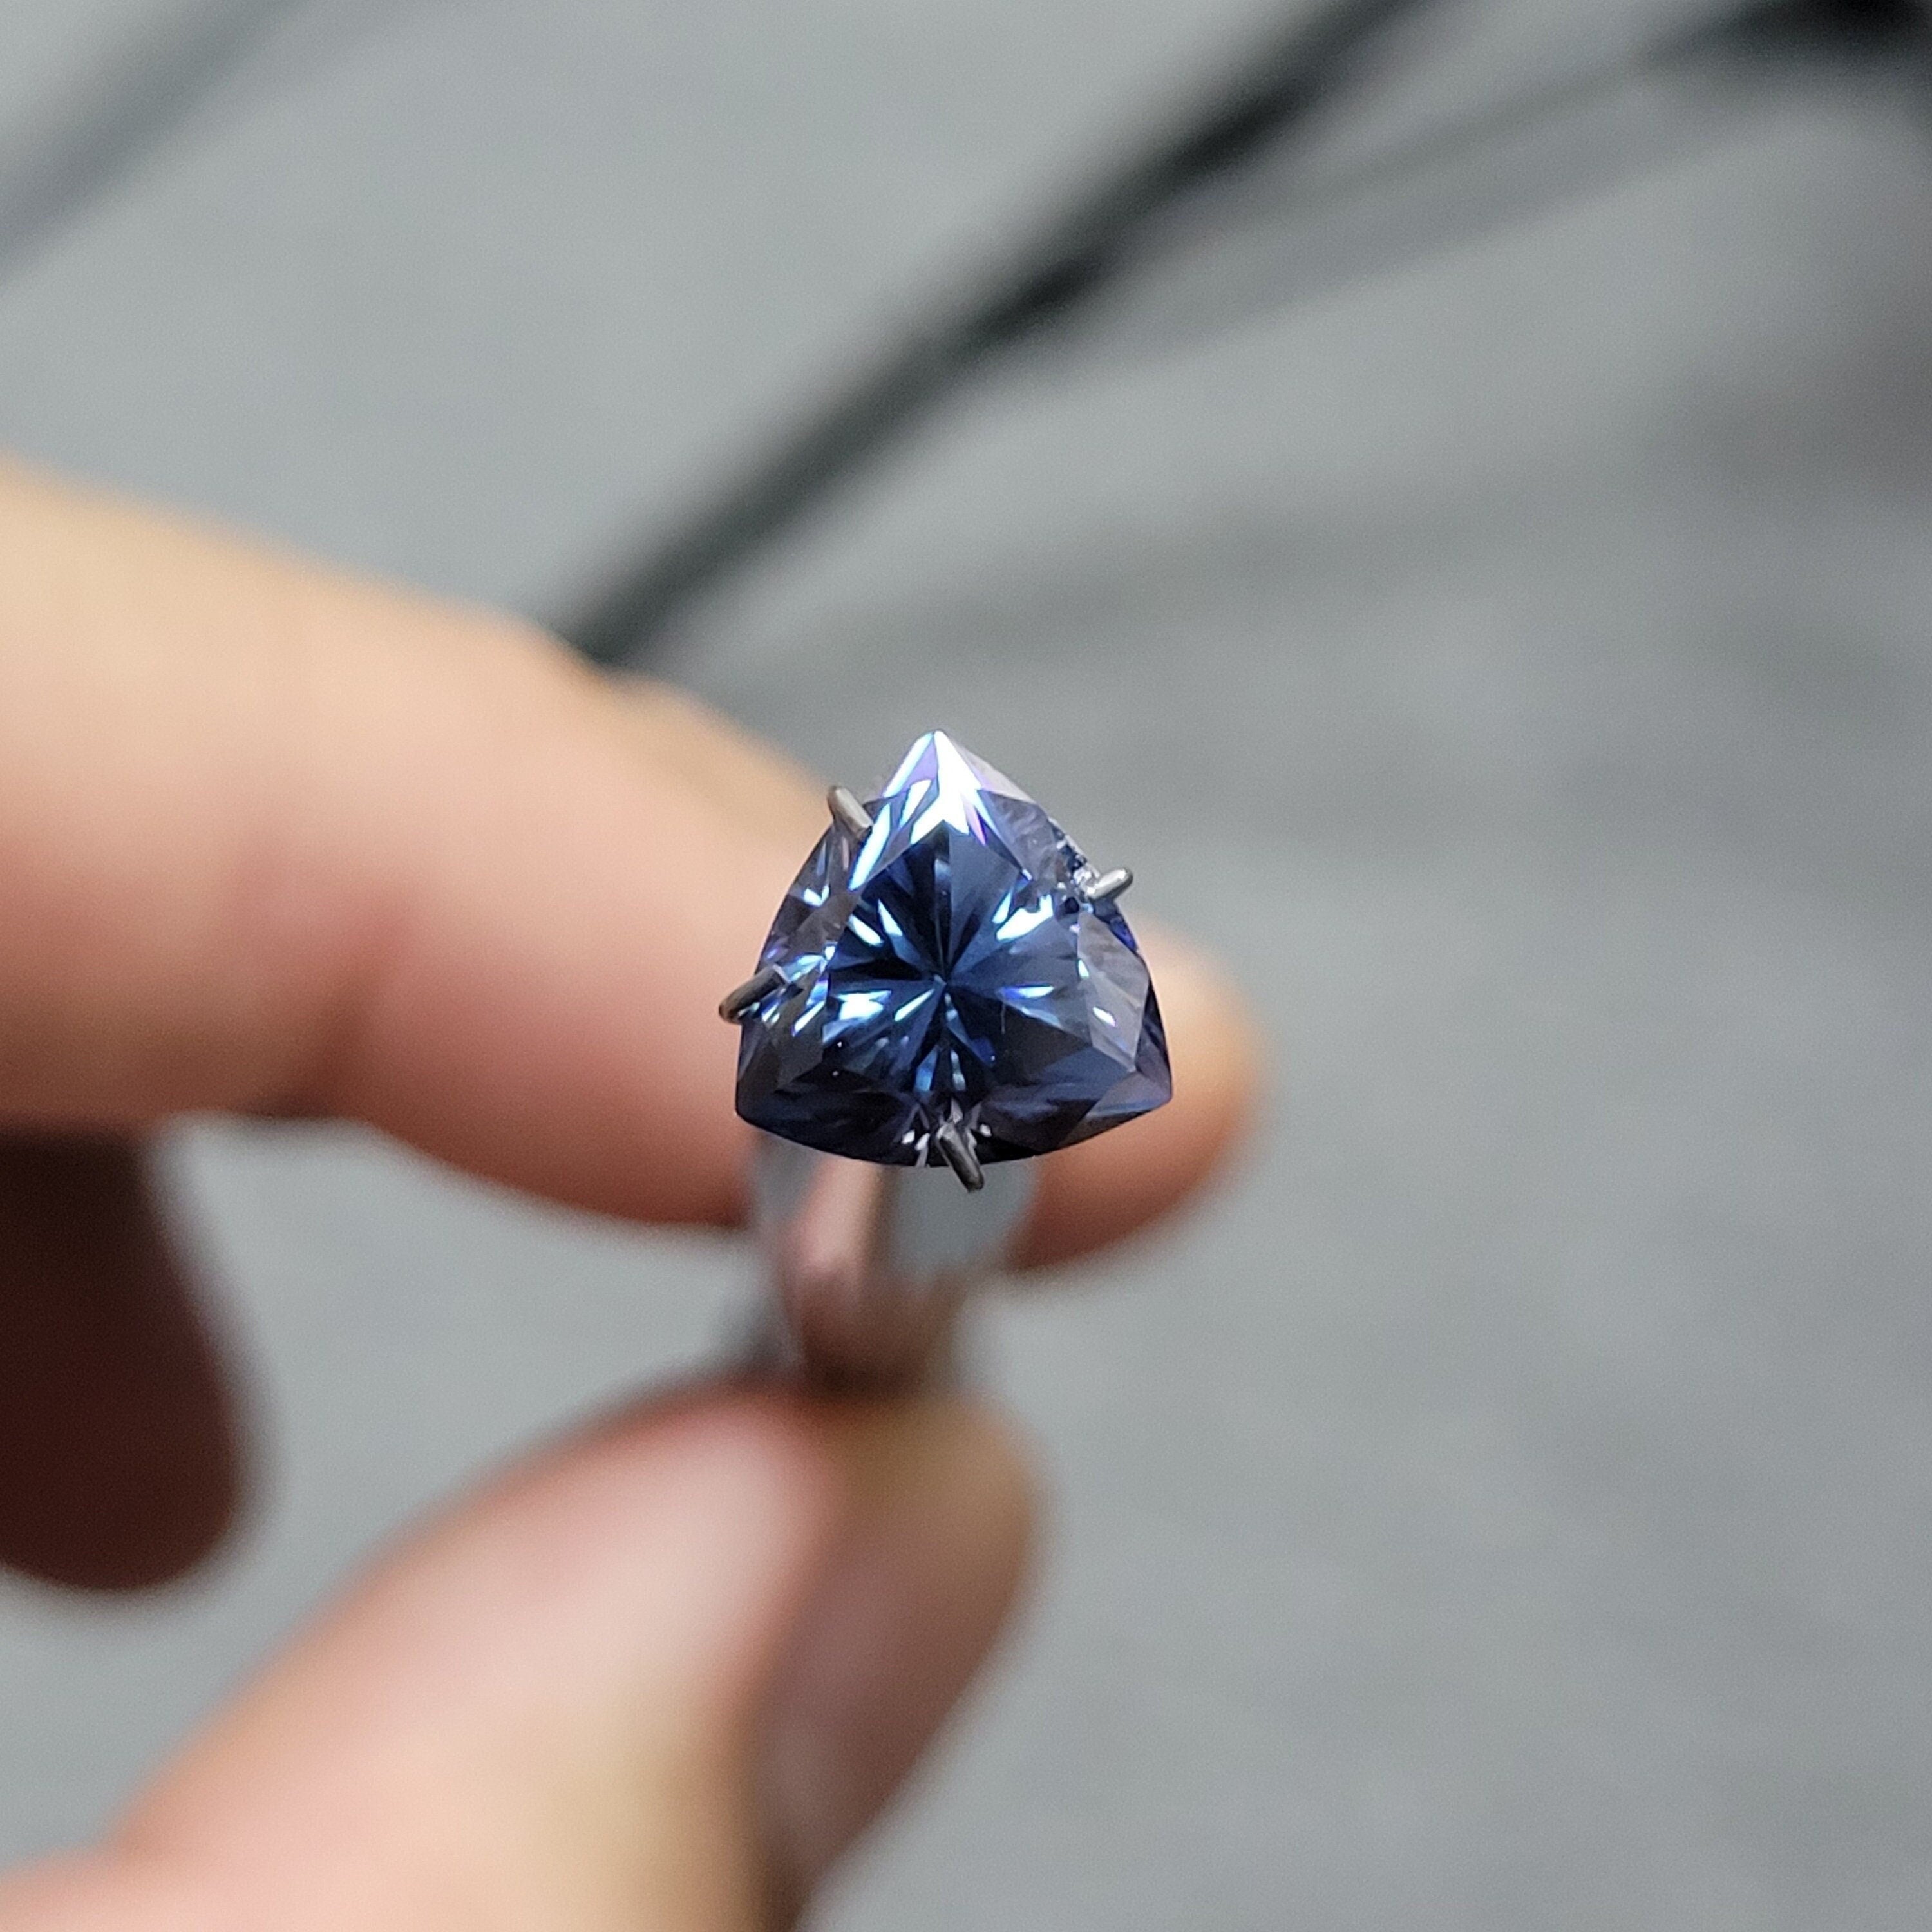 8mm 2ct loose moissanite certified vvs1 royal blue trillion cut gra laboratory gemstone